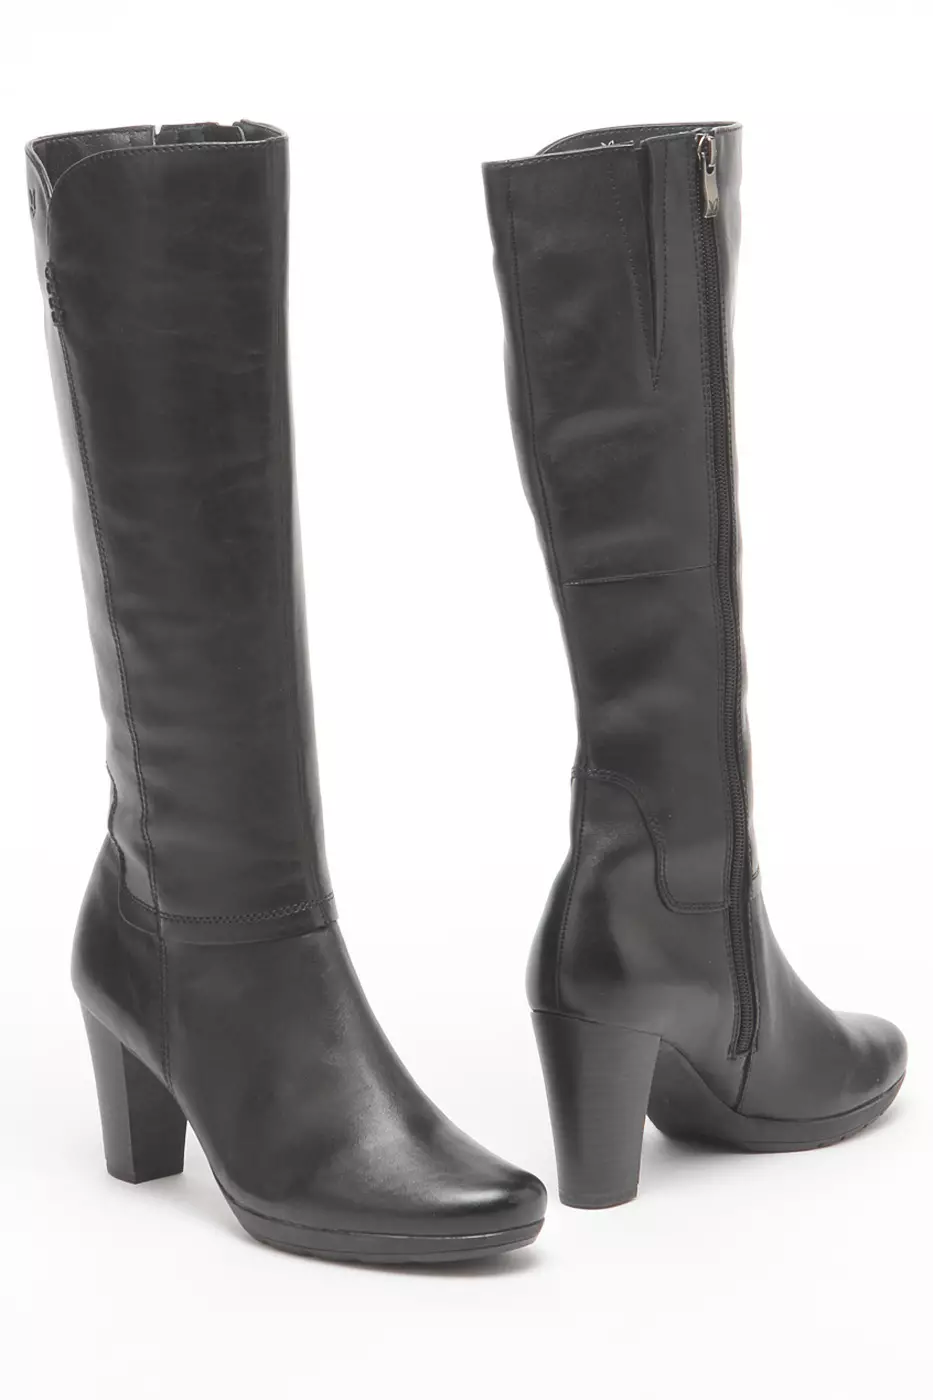 Caprice Boots (35 ခု) - အမျိုးသမီးများ၏ဆောင်းတွင်းမော်ဒယ်များနှင့်သူတို့၏အင်္ဂါရပ်များ, Caprice အကြောင်းပြန်လည်သုံးသပ်ခြင်း 2221_7